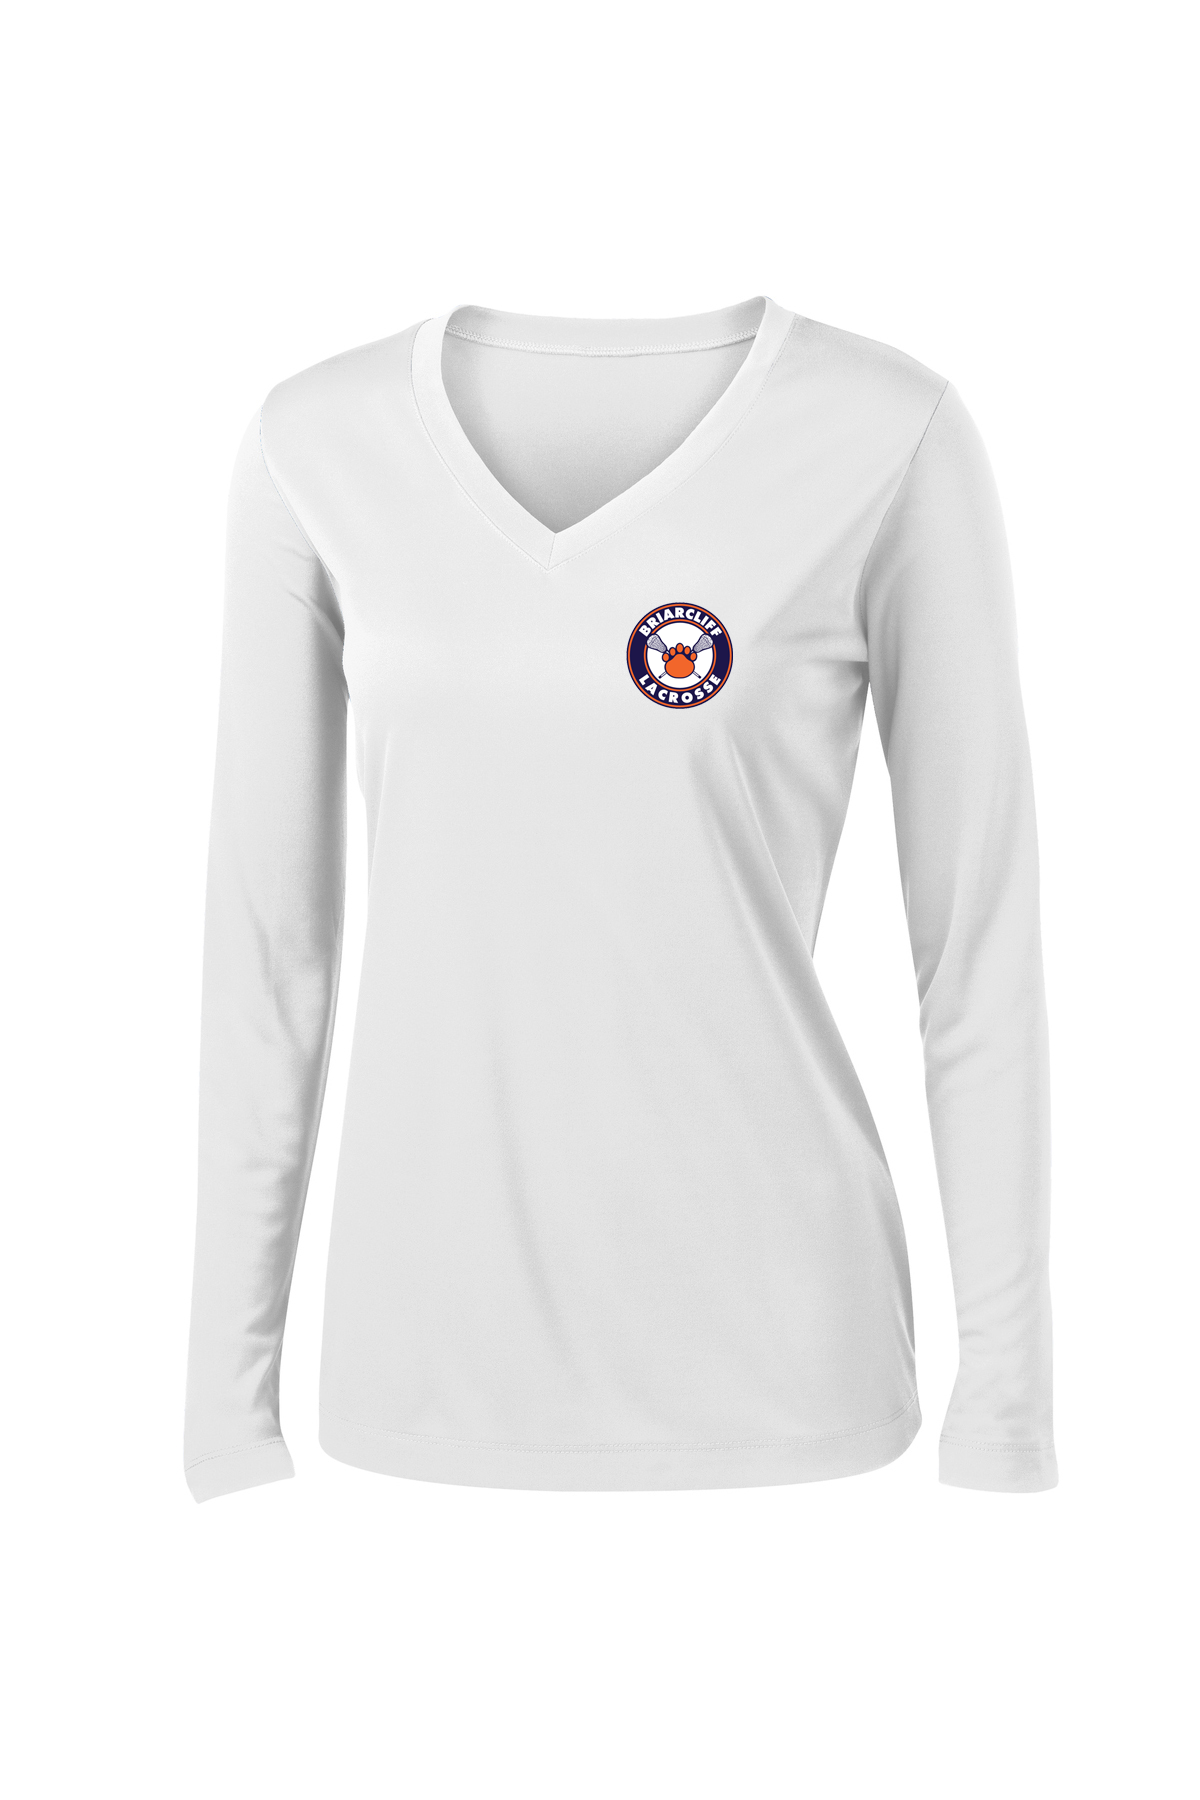 Briarcliff Lacrosse Women's White Long Sleeve Performance Shirt